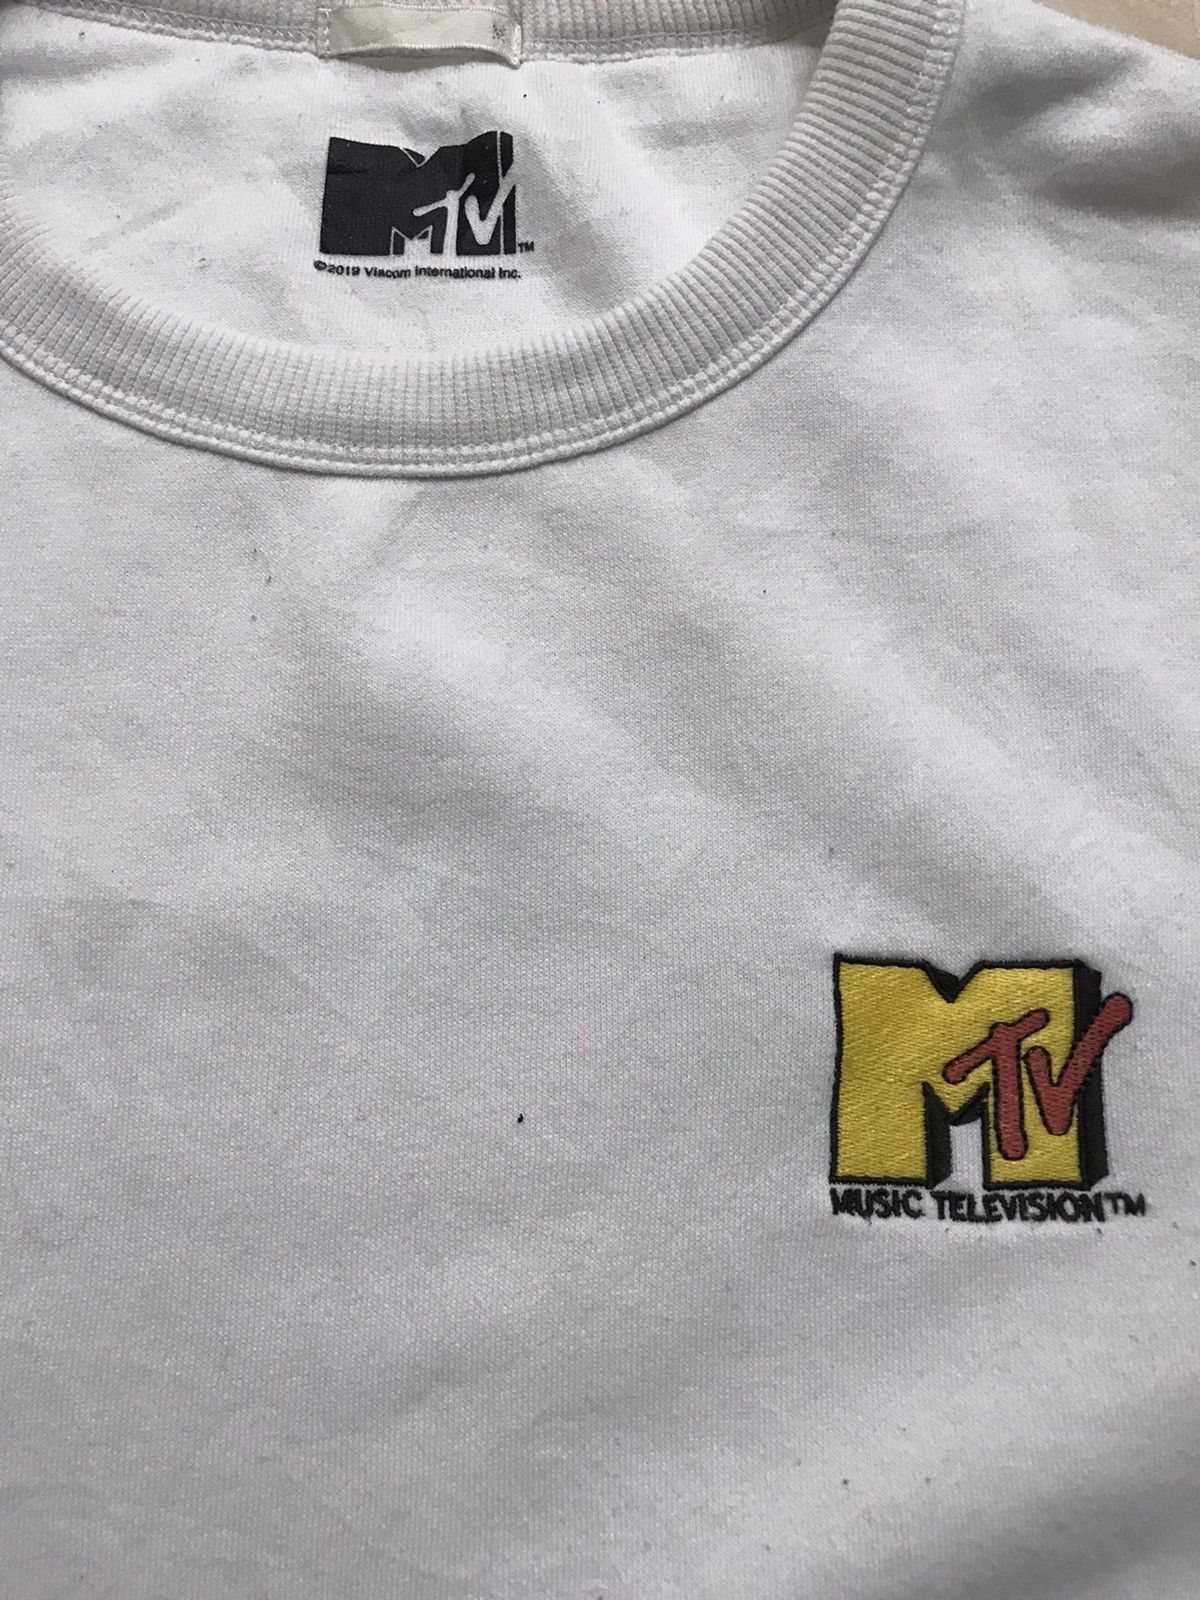 Vintage Vintage Mtv Music Television Sweatshirt Embroidered Logo Size US M / EU 48-50 / 2 - 3 Preview